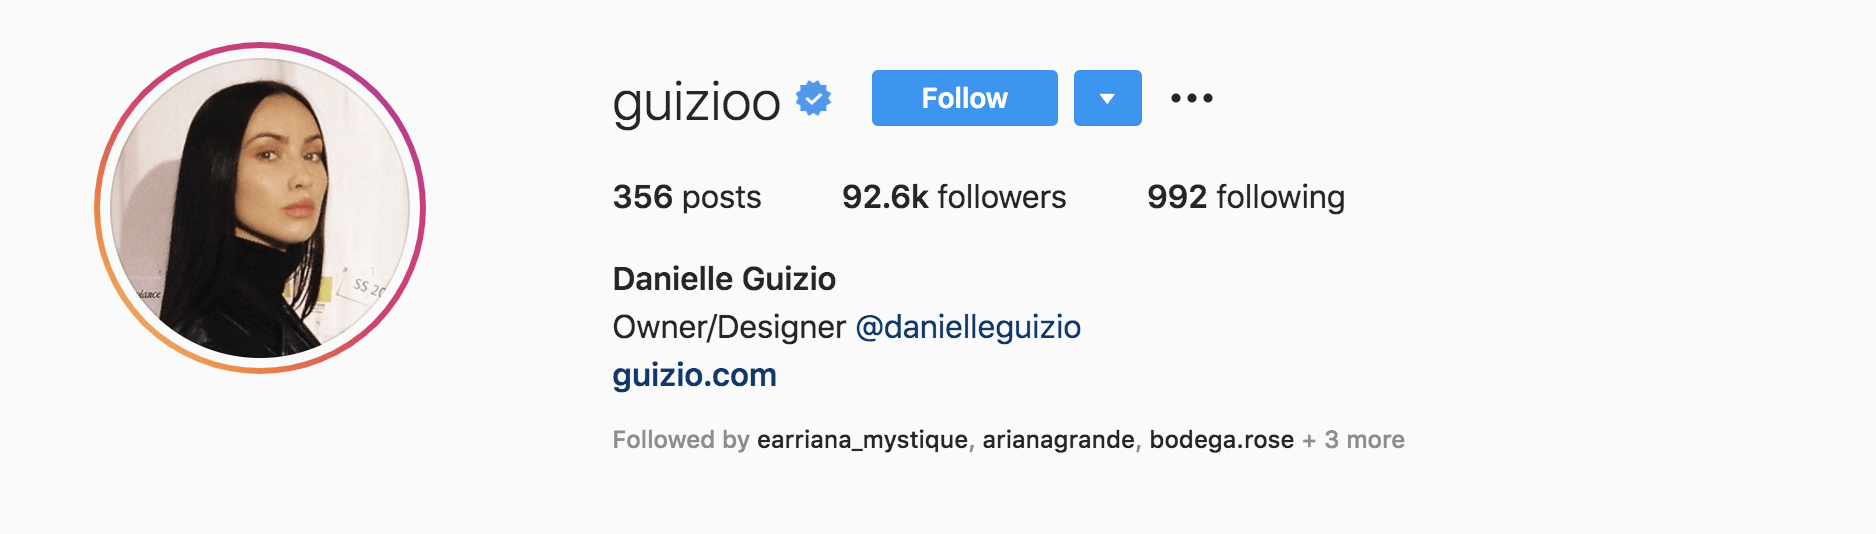 Top Fashion Influencers - Danielle Guizio